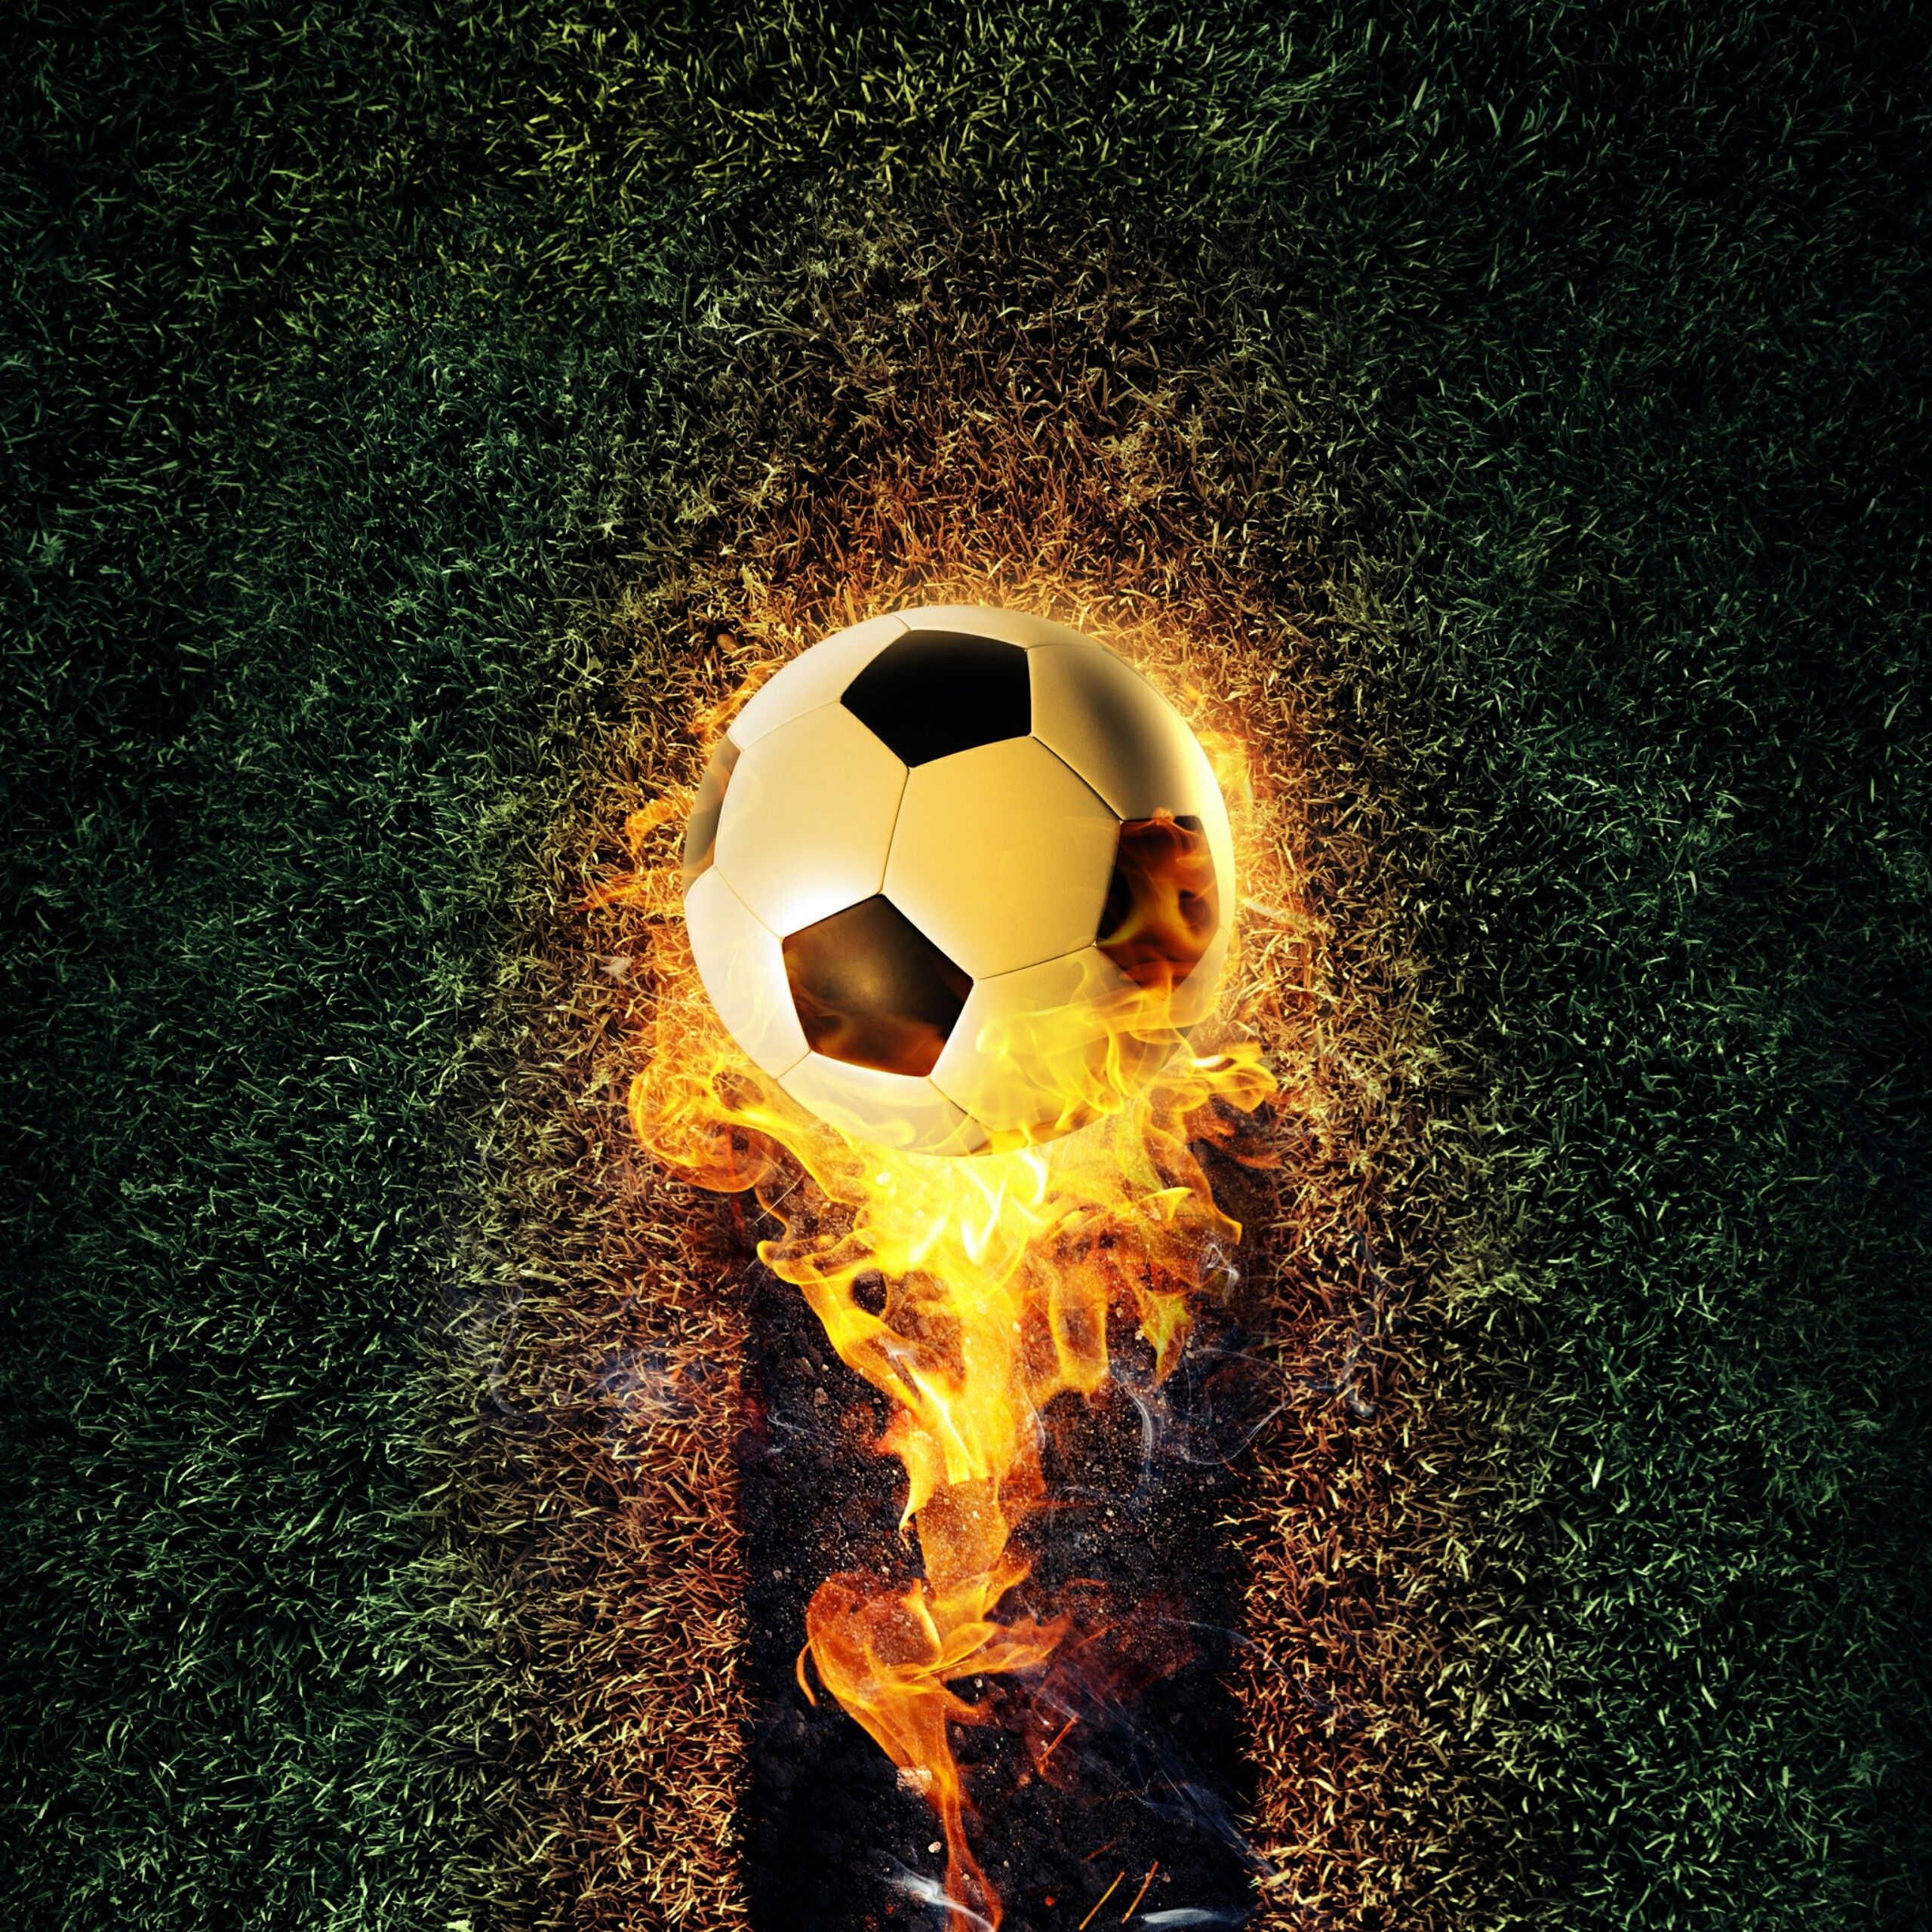 Soccer Ball On Fire Wallpaper